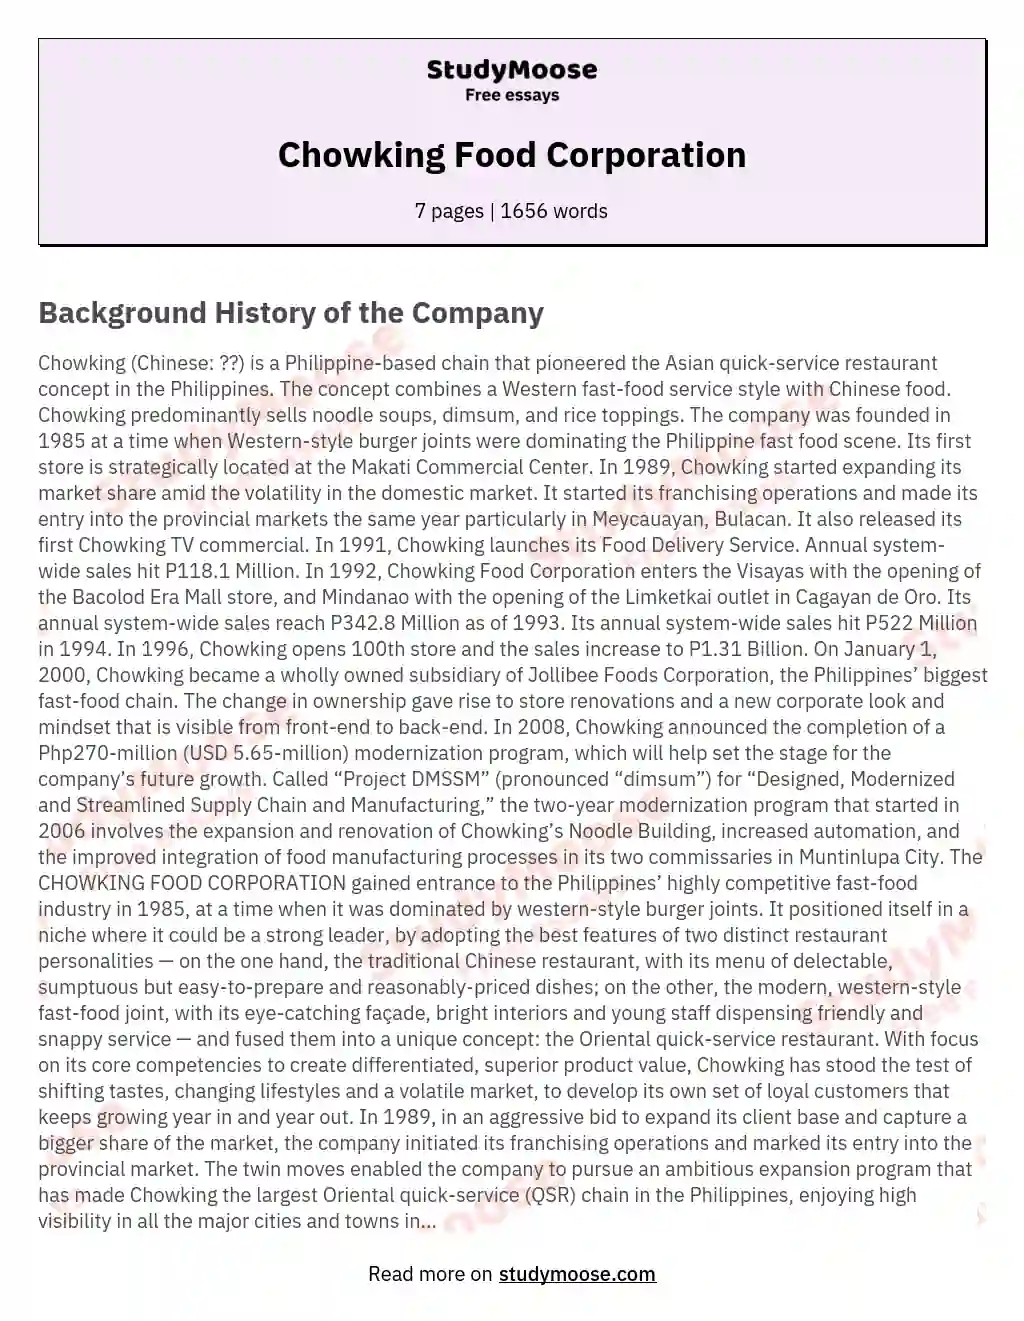 Chowking Food Corporation essay